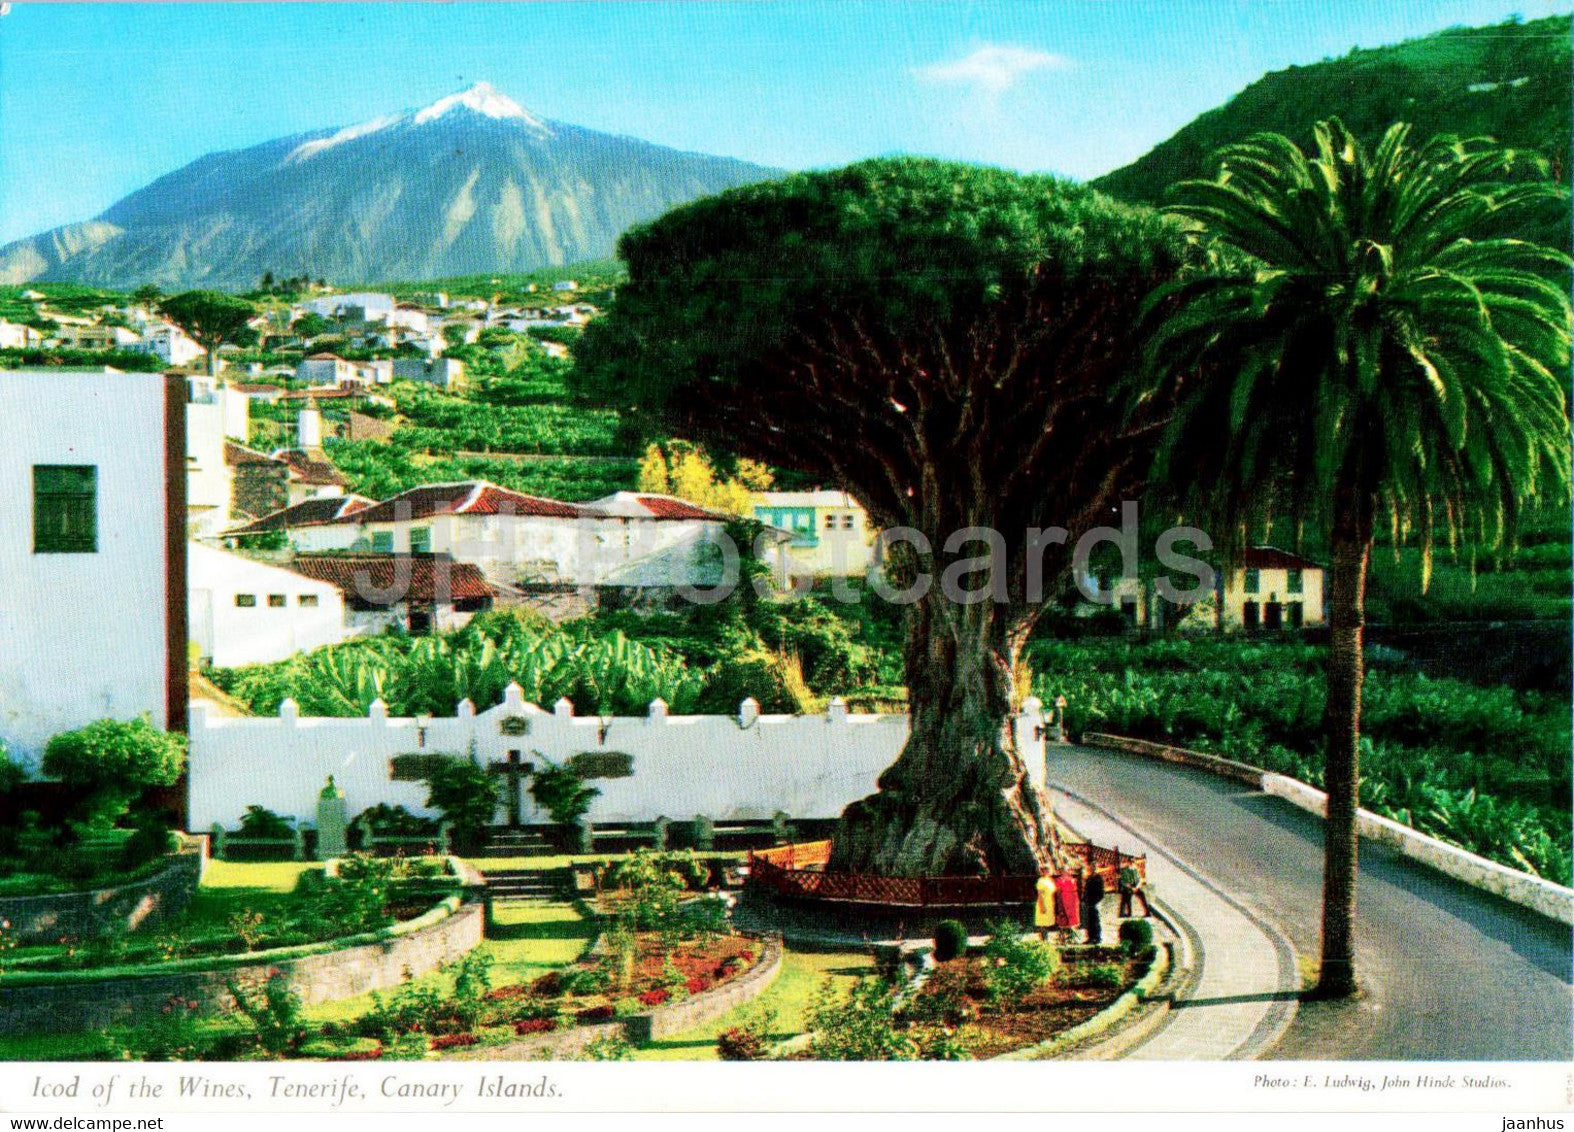 Icod of the Wines - Canary Islands - Tenerife - dragon tree - Spain - unused - JH Postcards